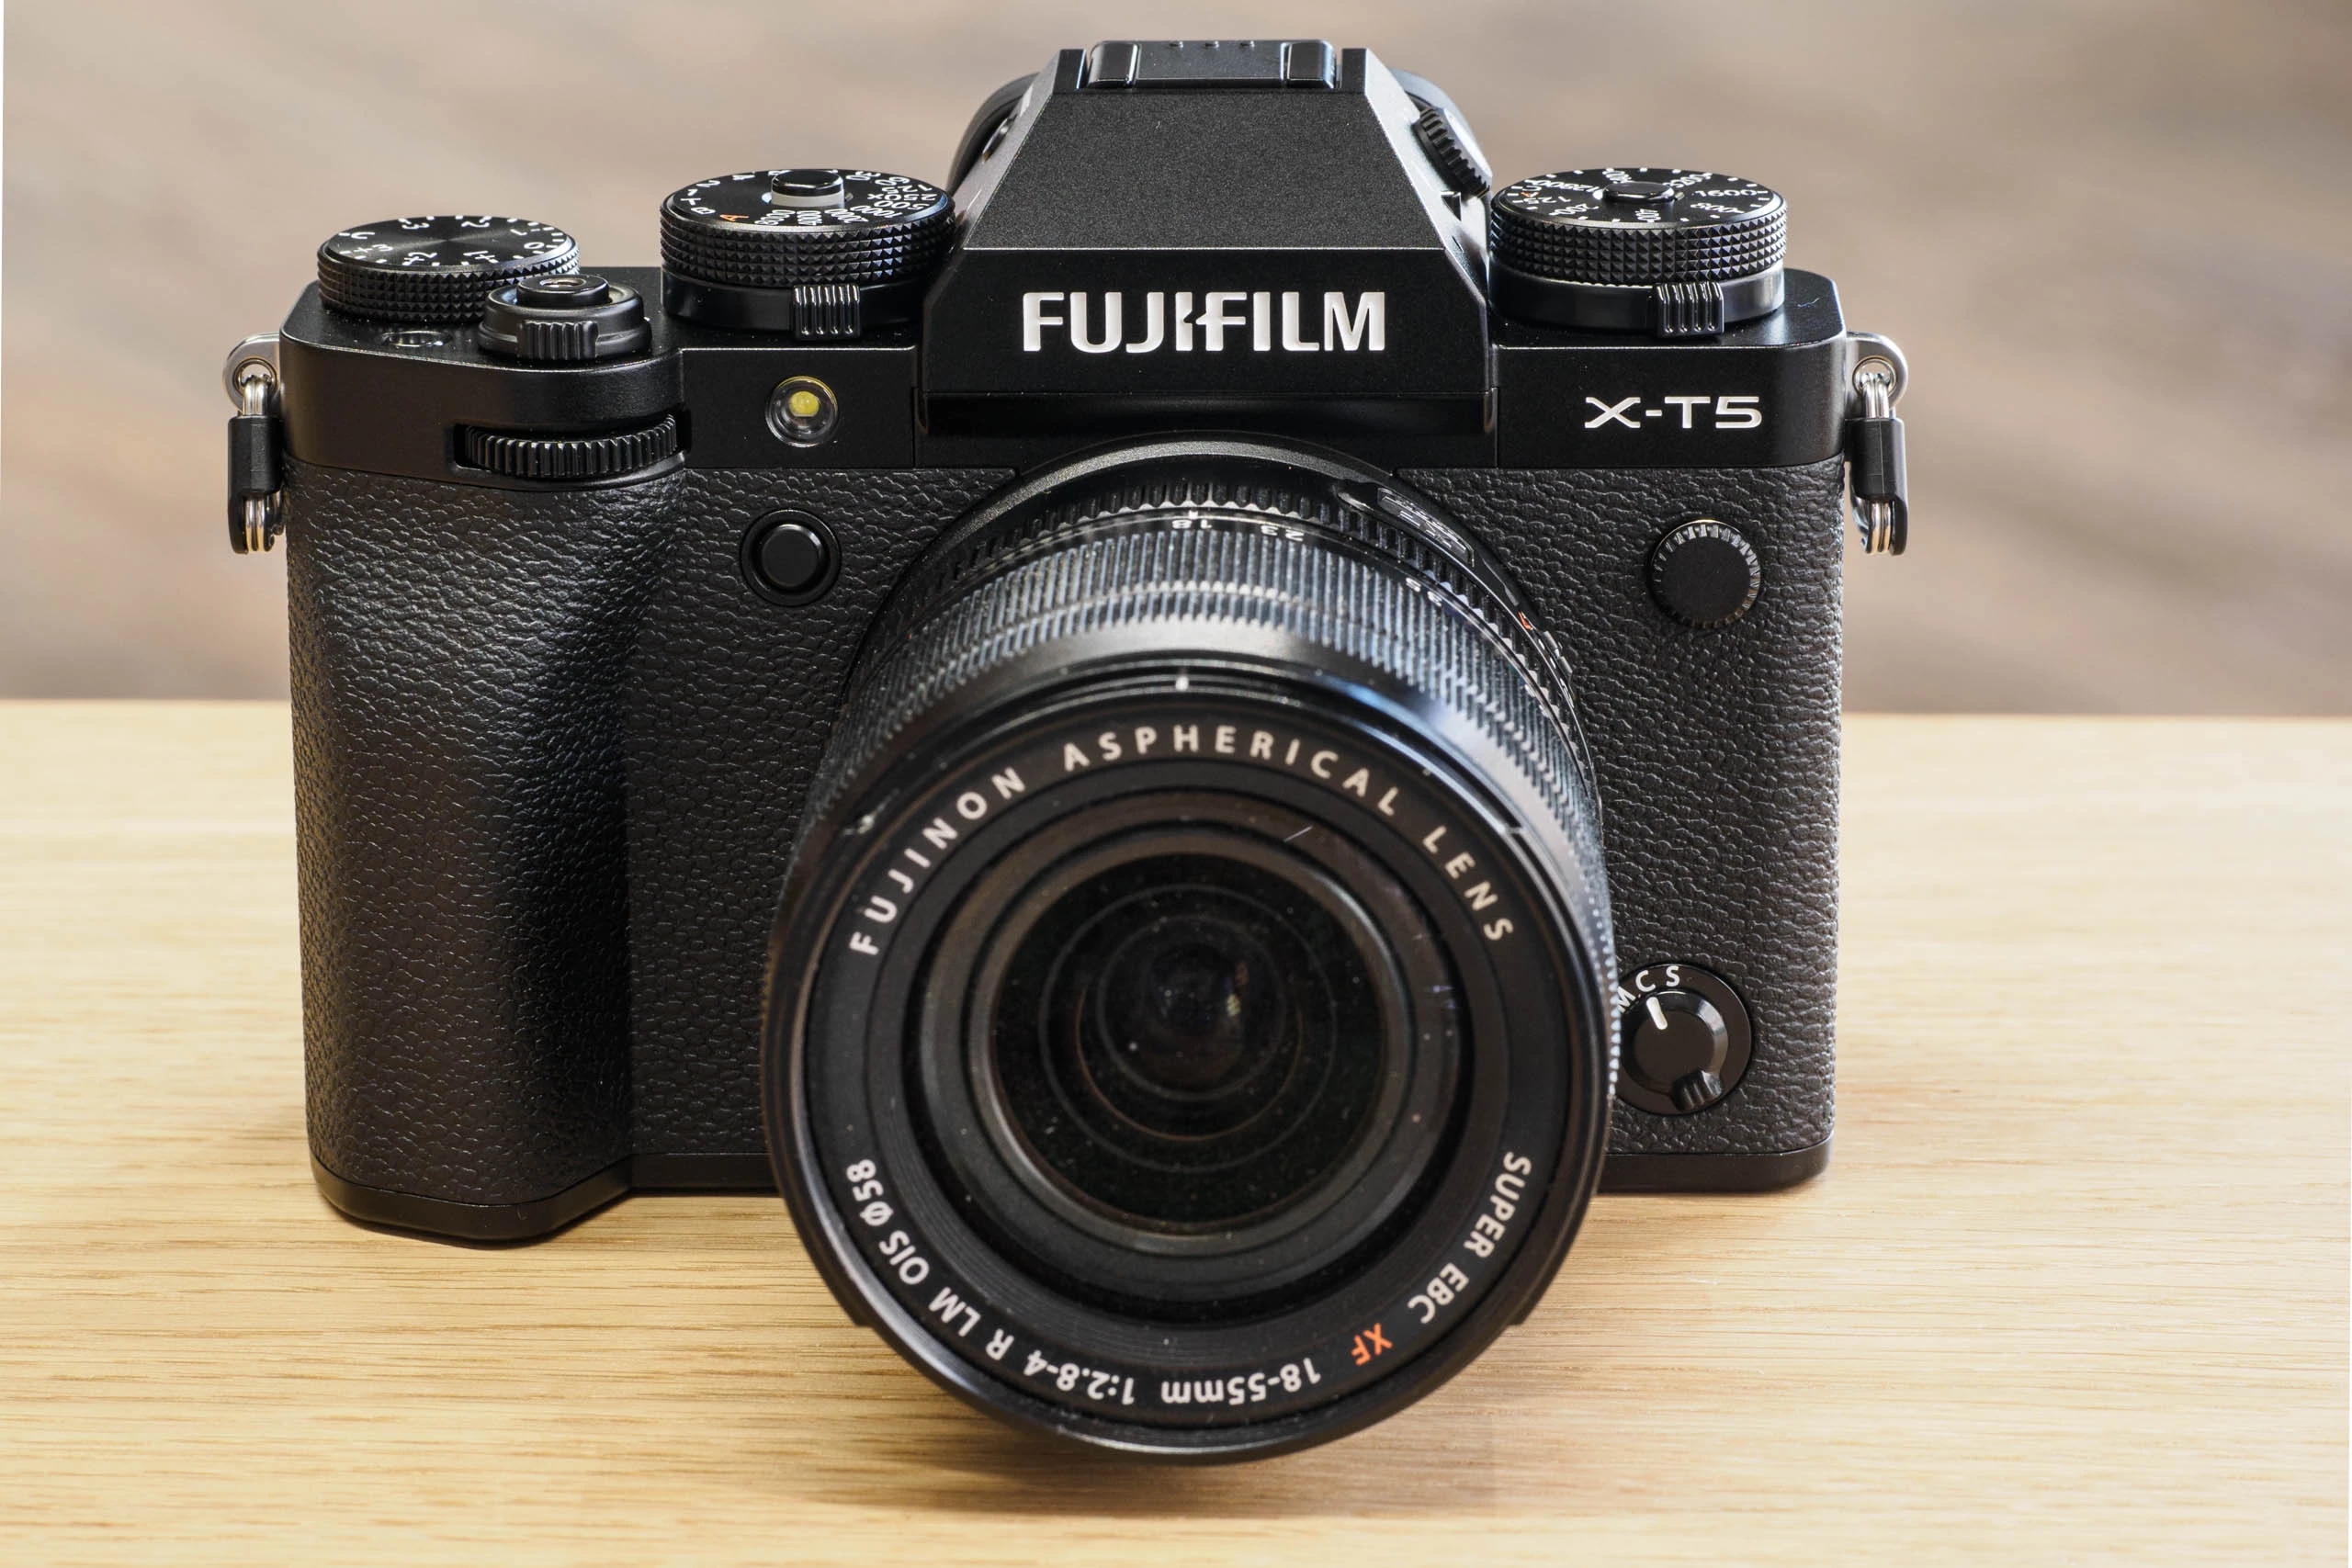 Fujifilm mengeluarkan peringatan saat pengguna mengalami pembekuan kamera (freeze) setelah menginstal firmware terbaru melalui aplikasi.